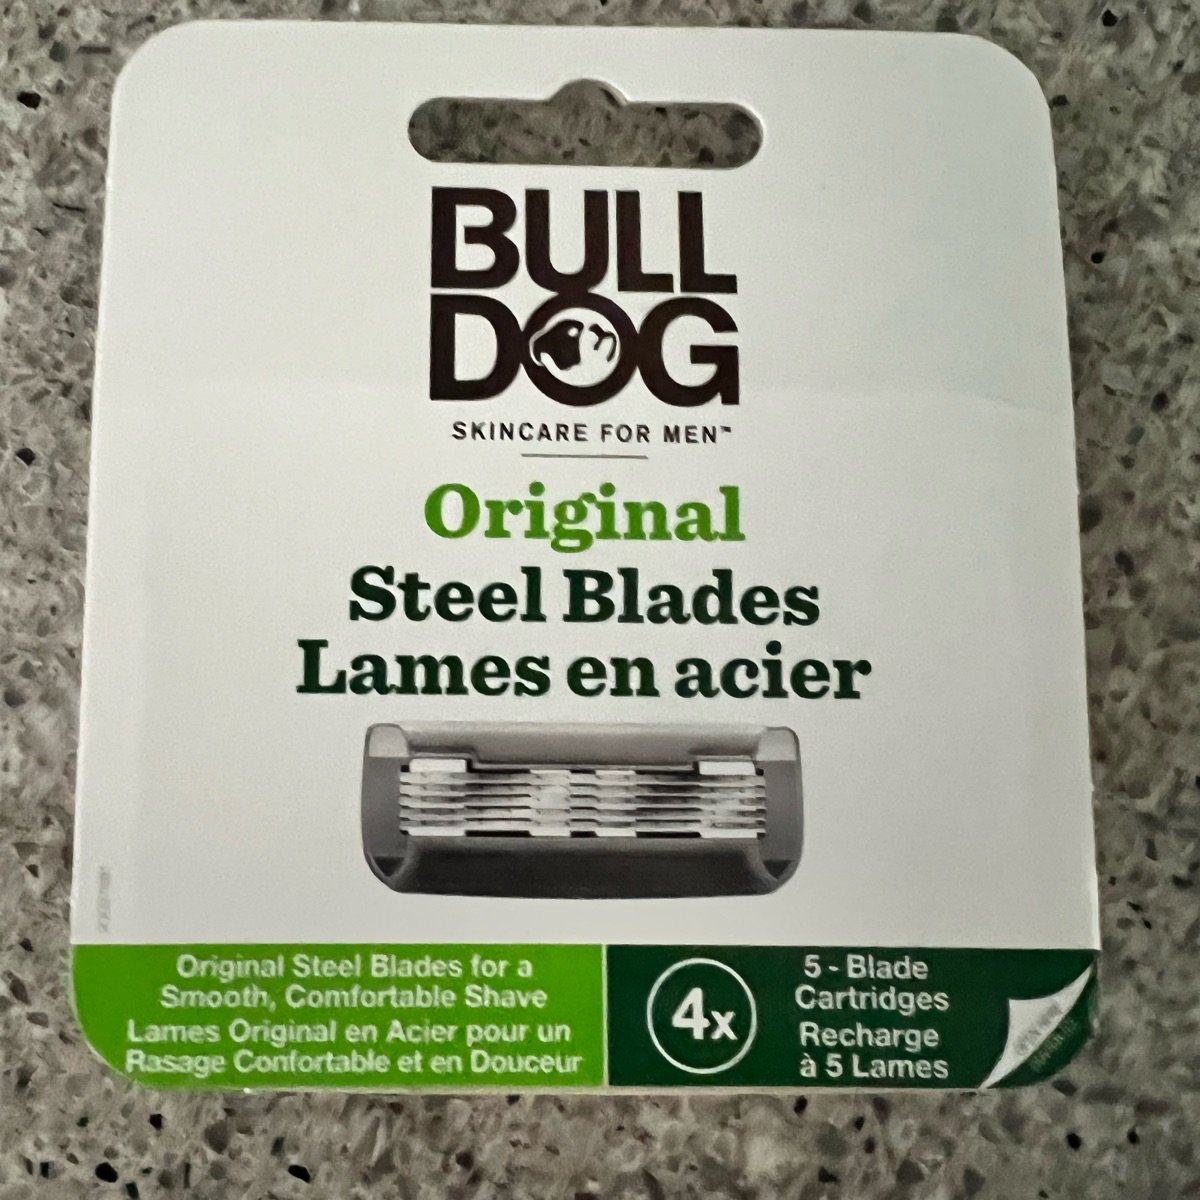 Bulldog Original Steel Blades Reviews | abillion